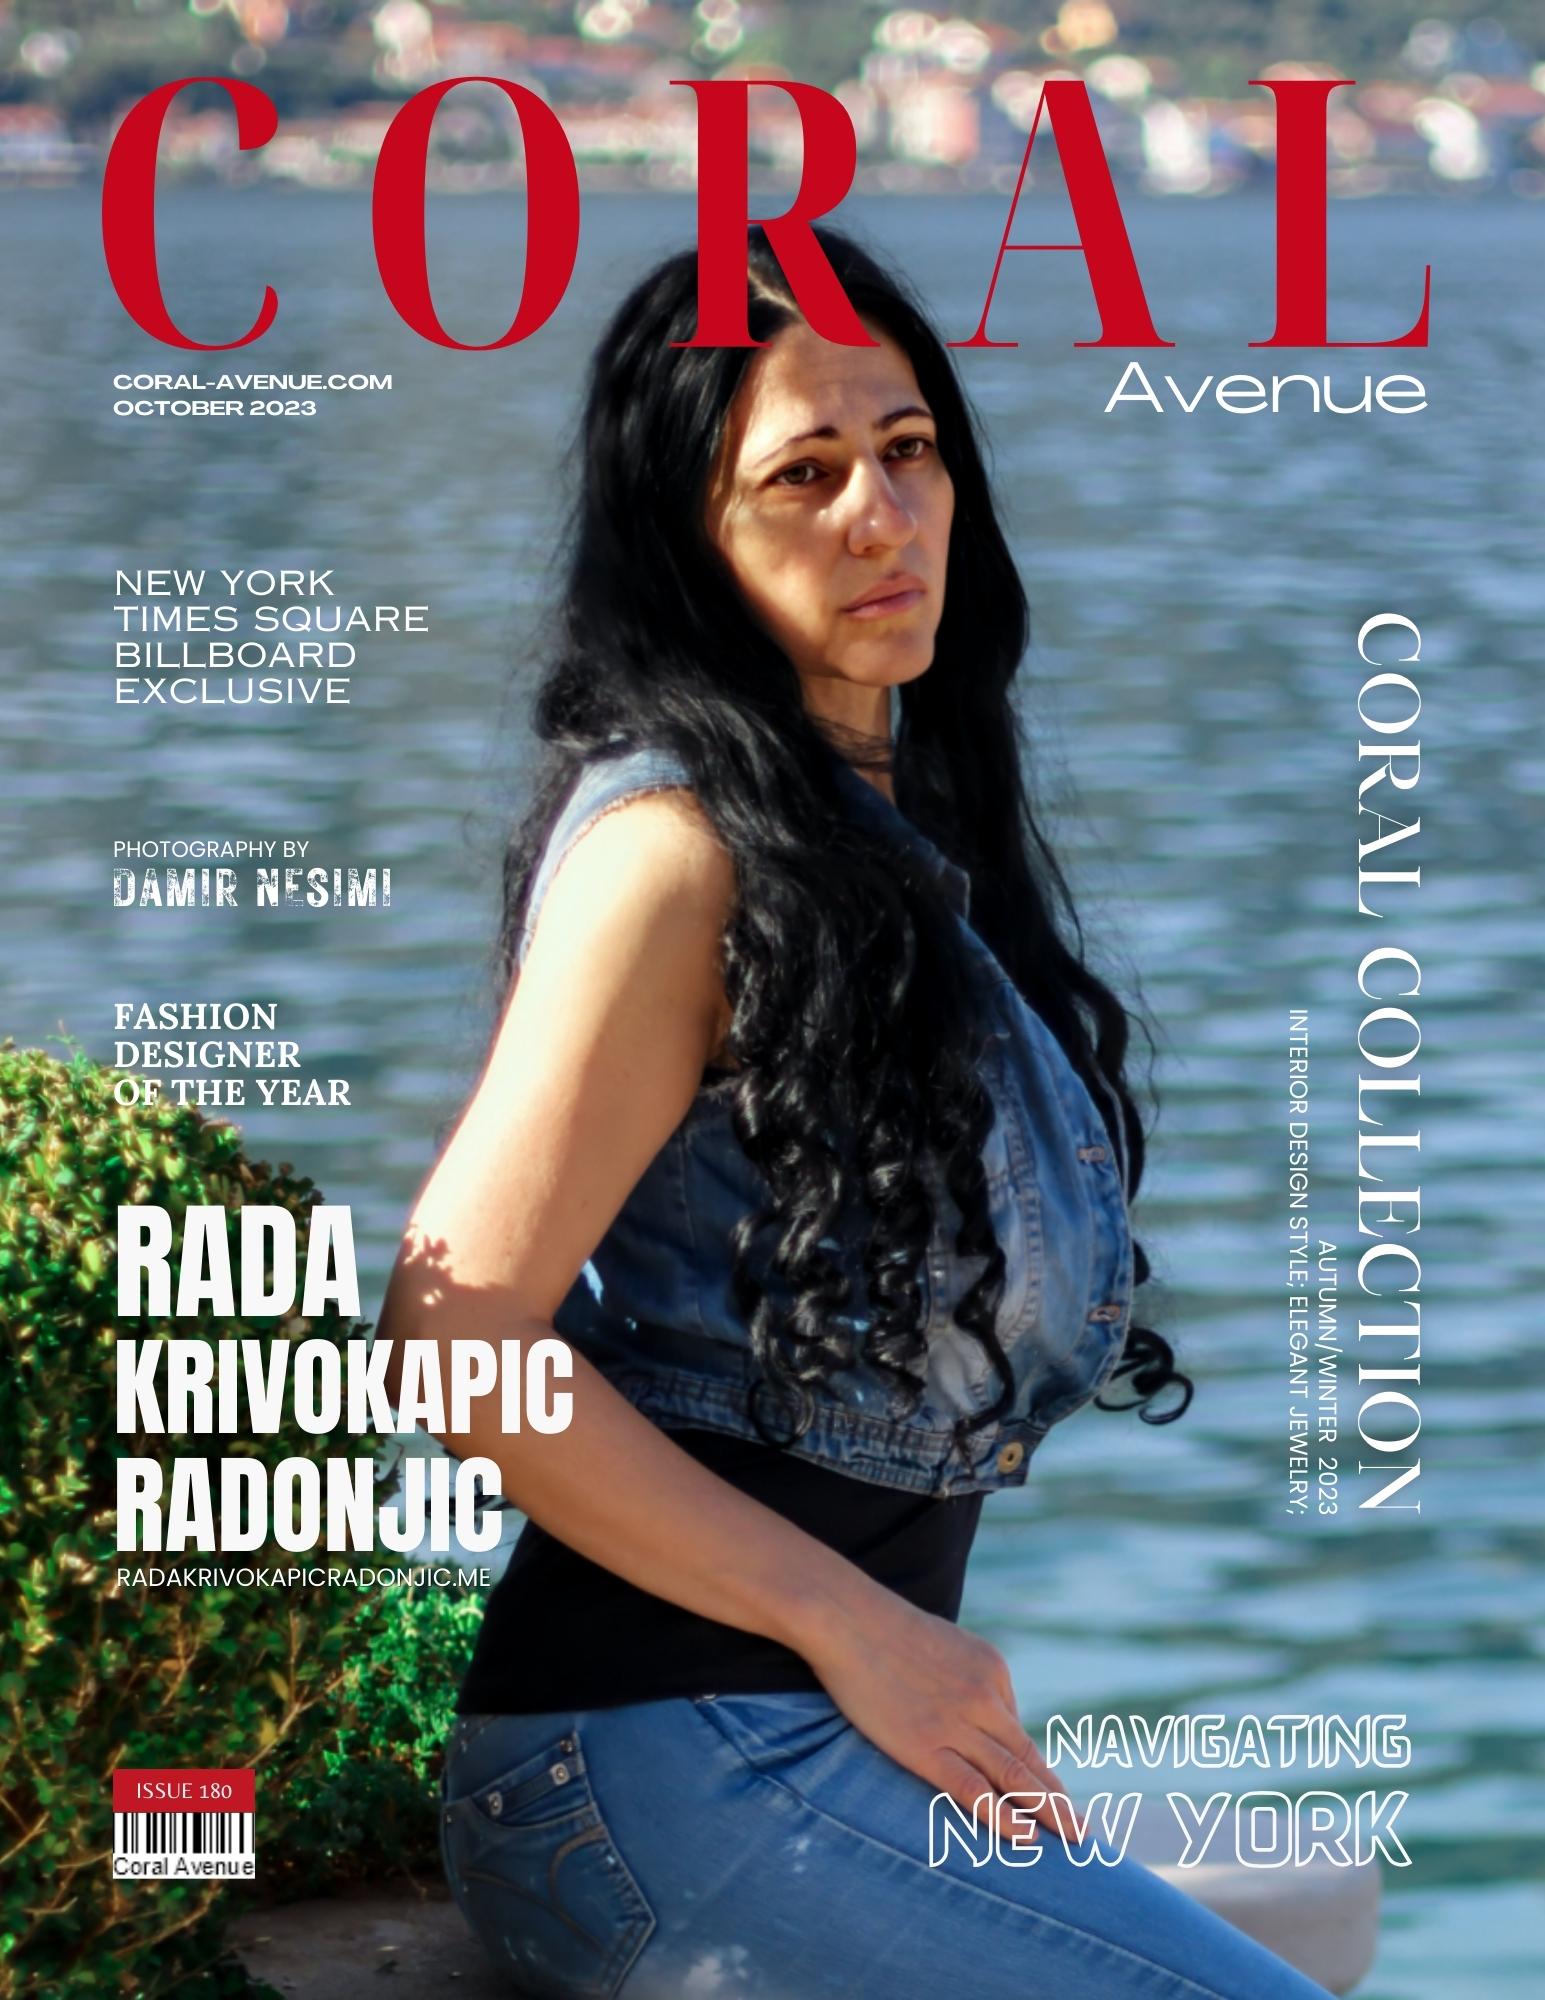 Rada Krivokapic Radonjic Fashion Designer and Stylist Coral Avenue Magazine